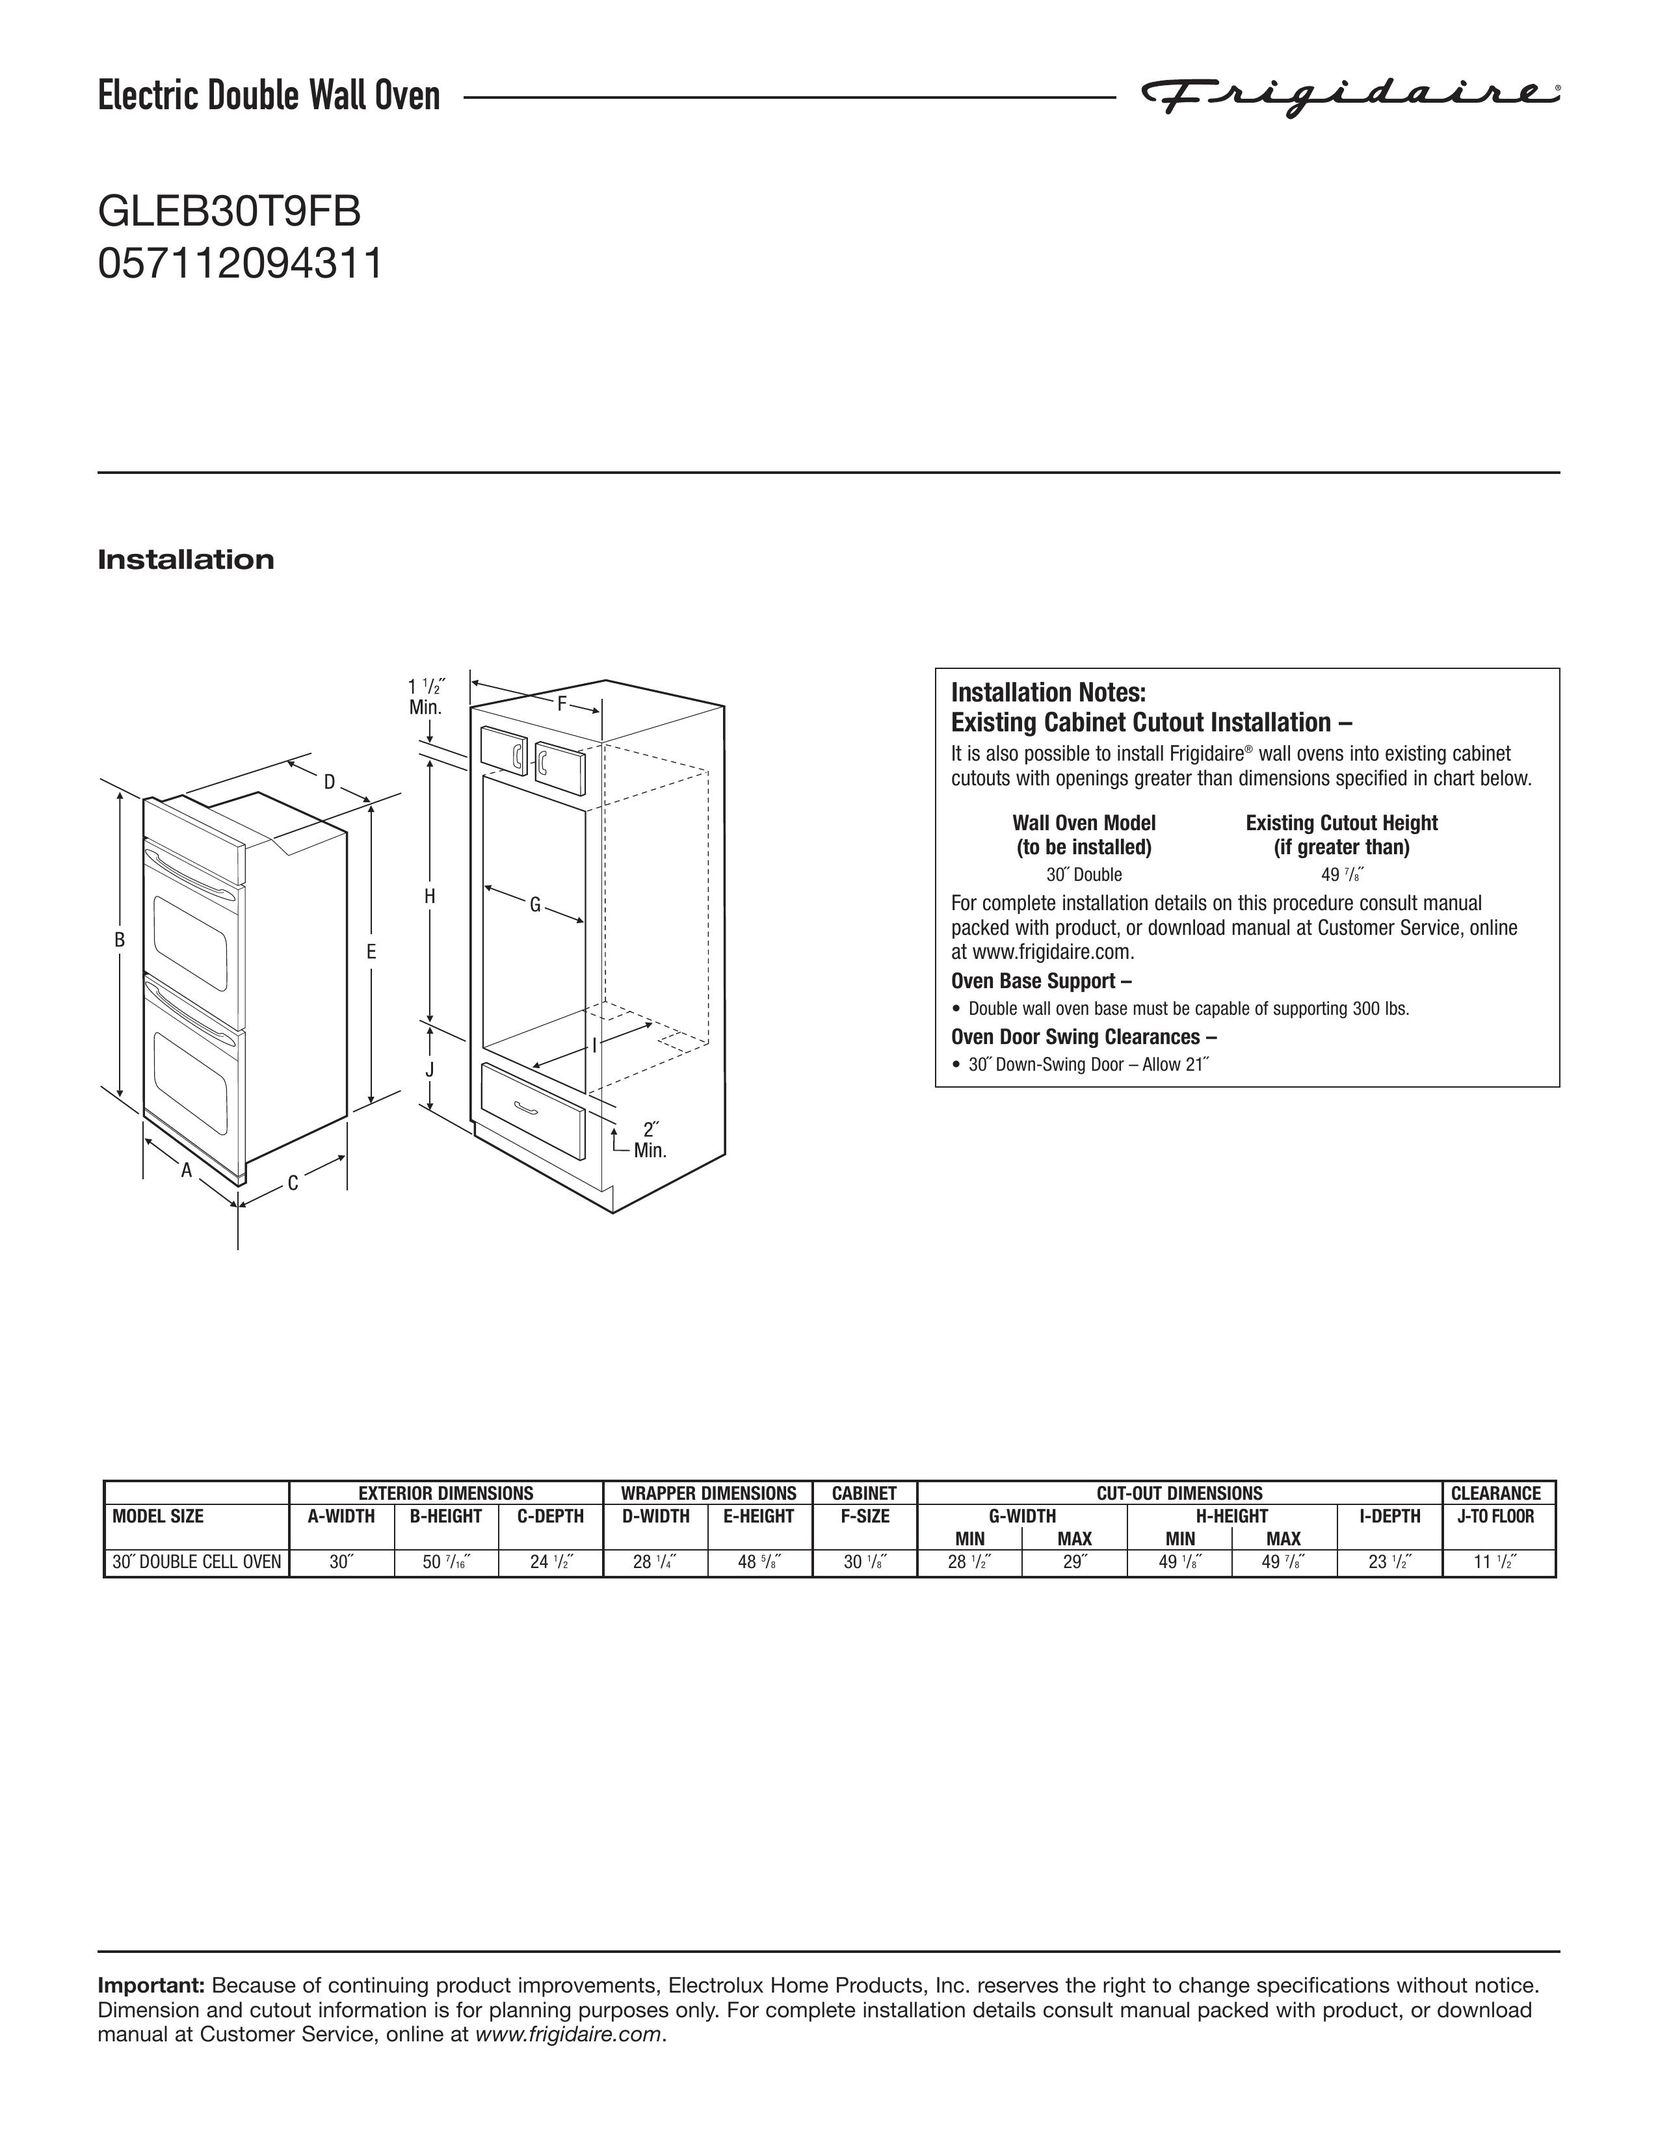 Frigidaire GLEB30T9FB Double Oven User Manual